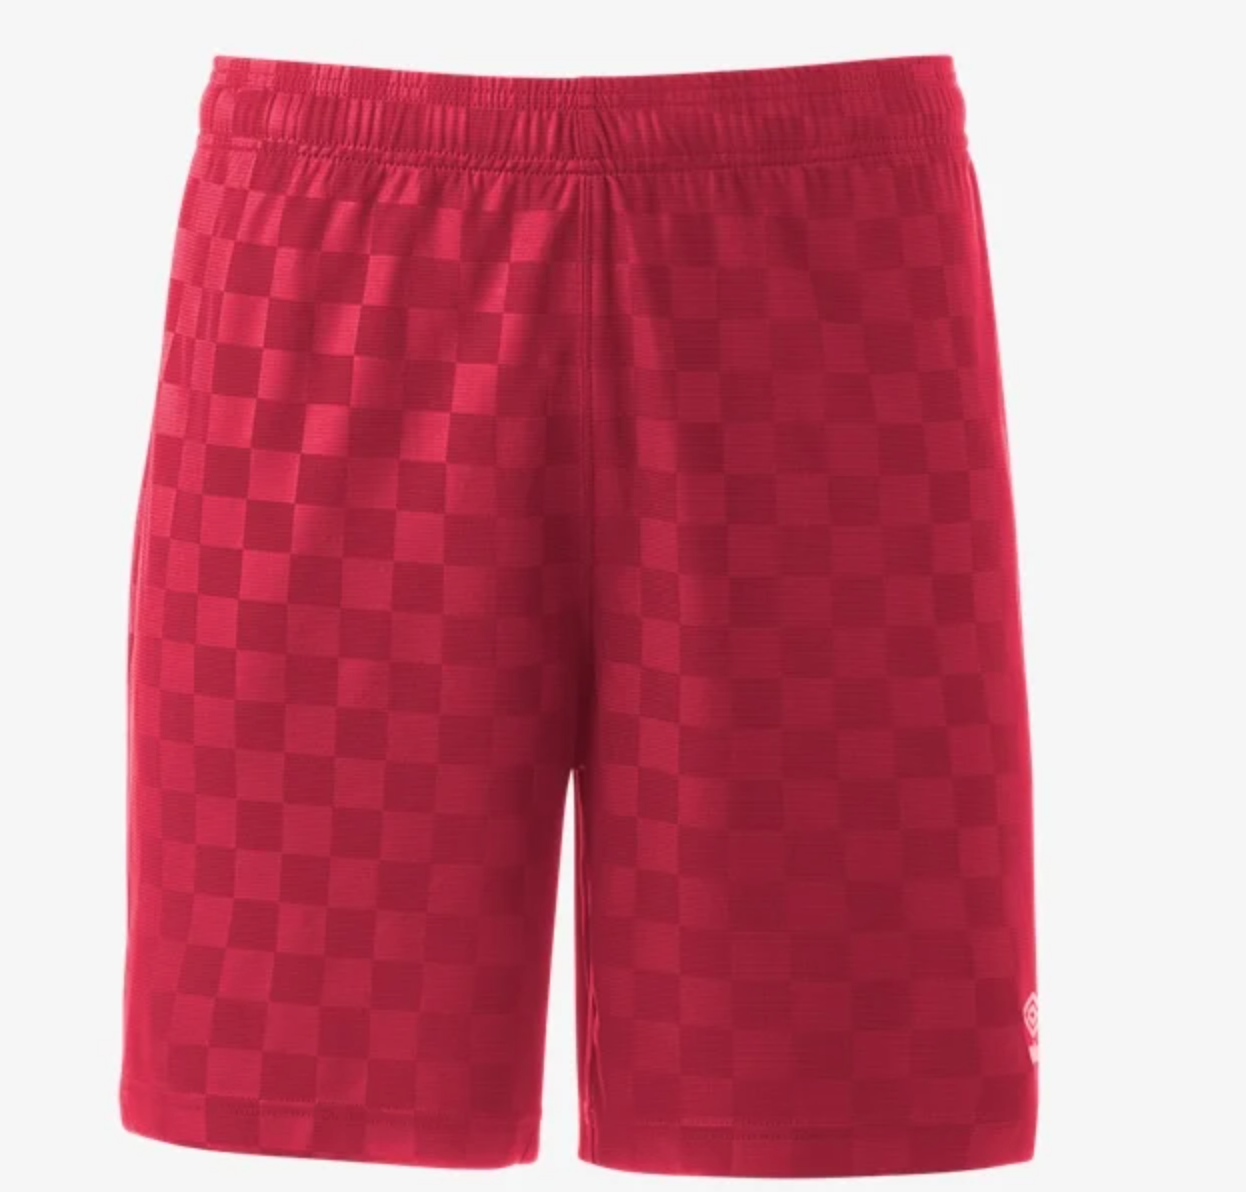 Umbro Checkered Shorts-Red